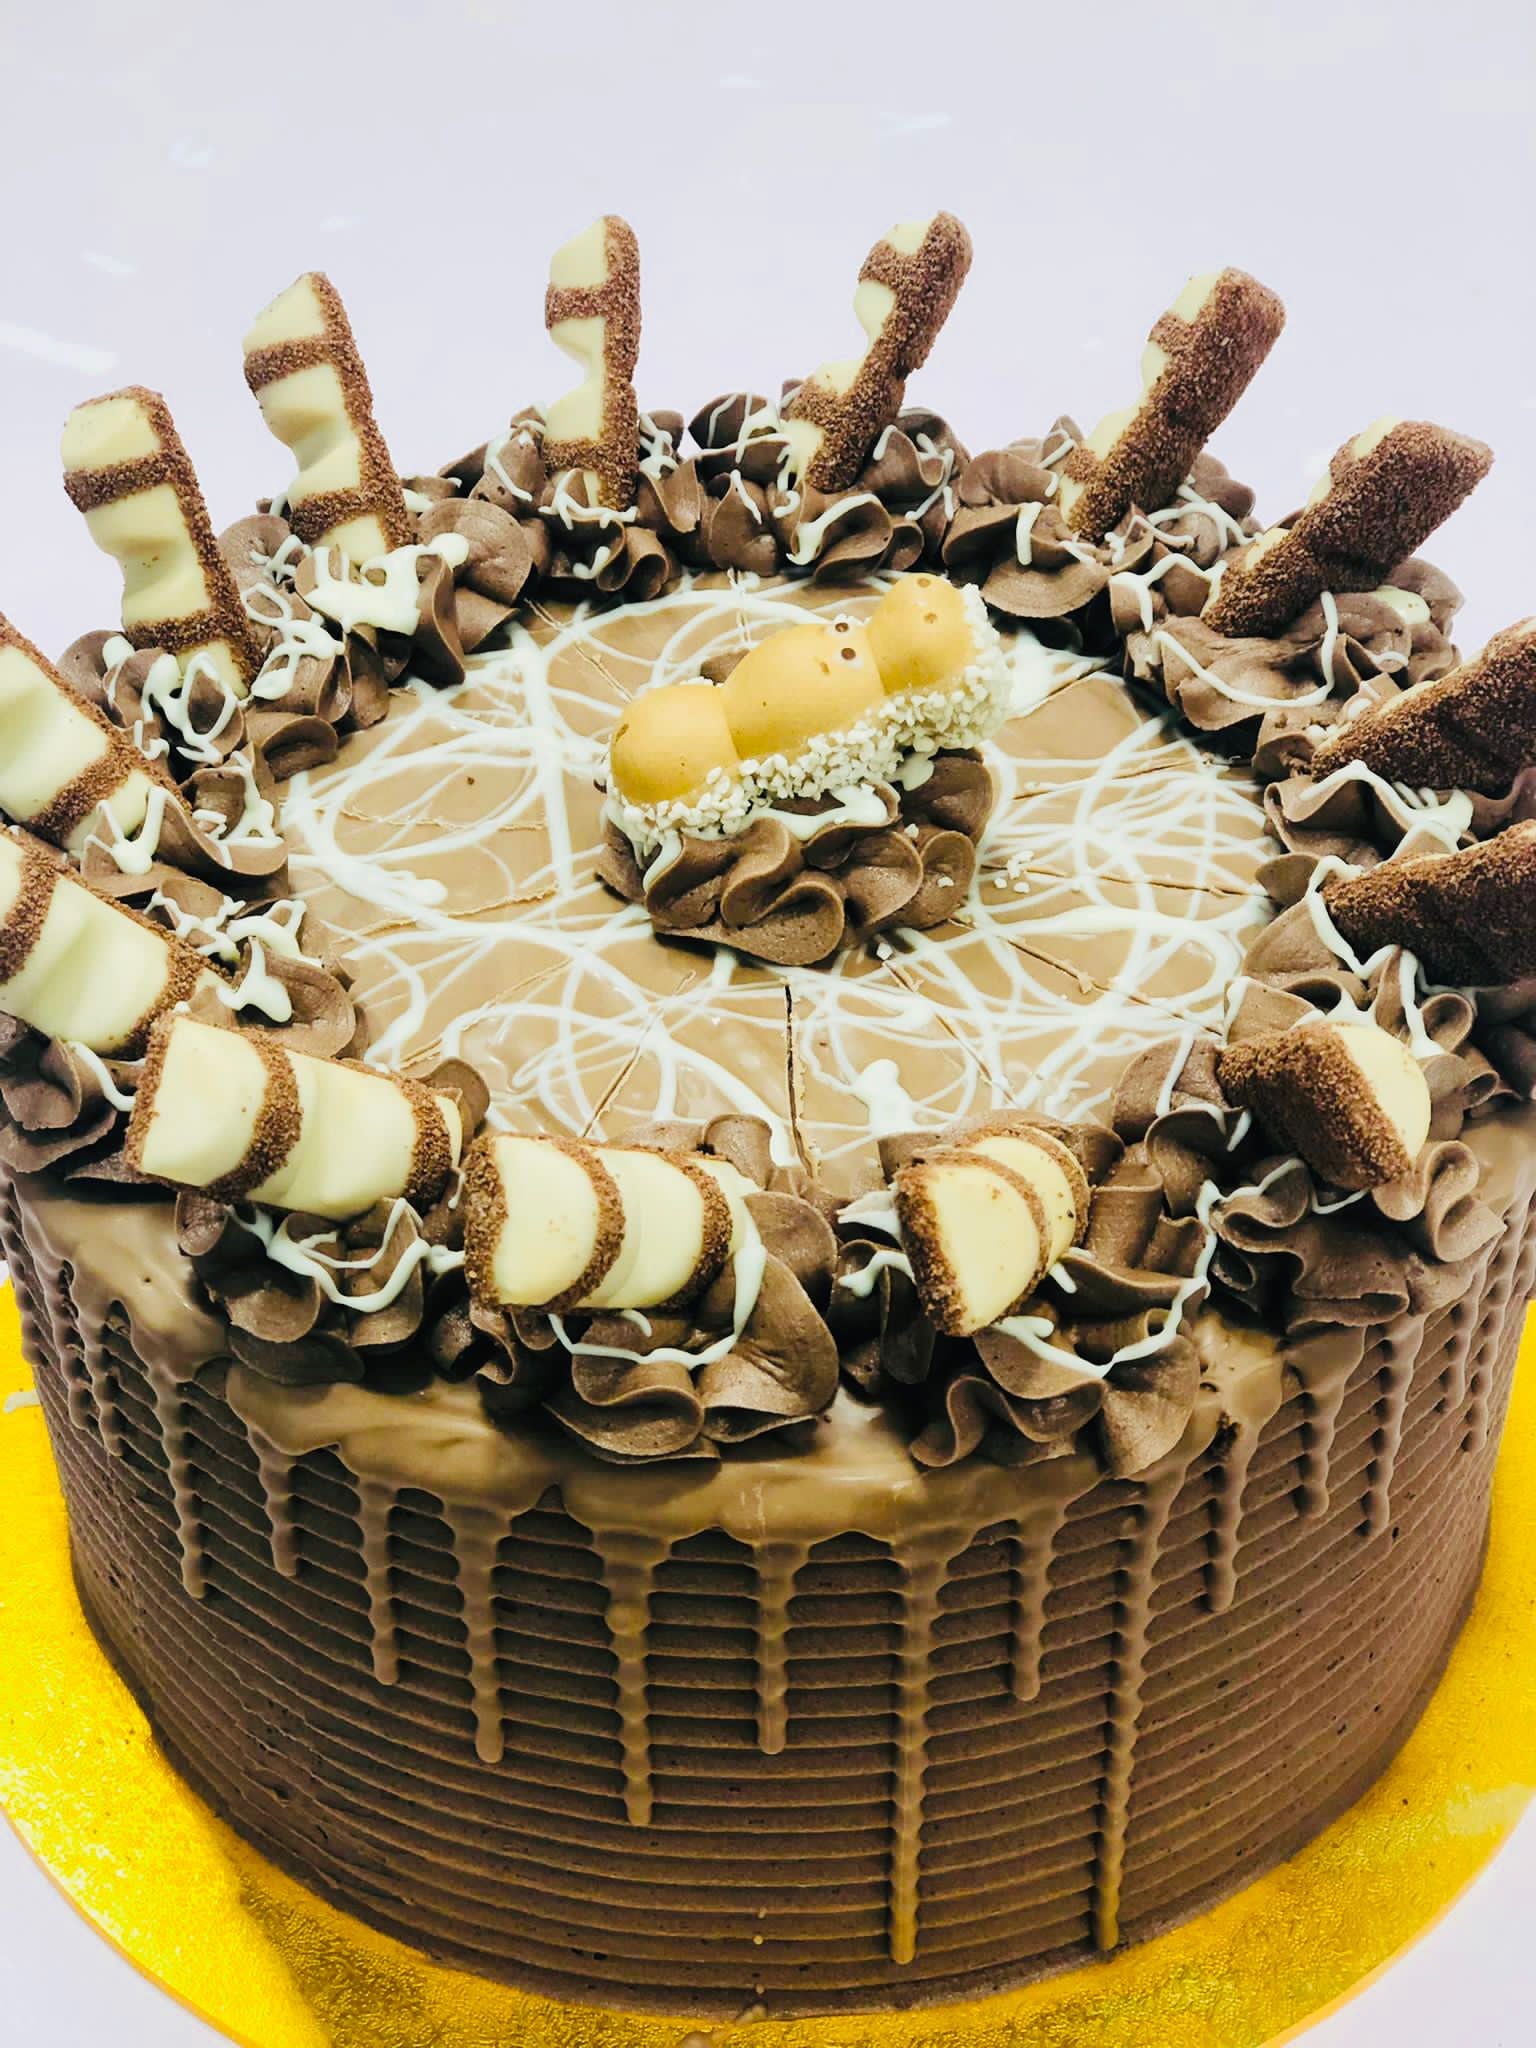 Kinder bueno themed 21st birthday cake... - Amy's Cakes&Bakes | Facebook